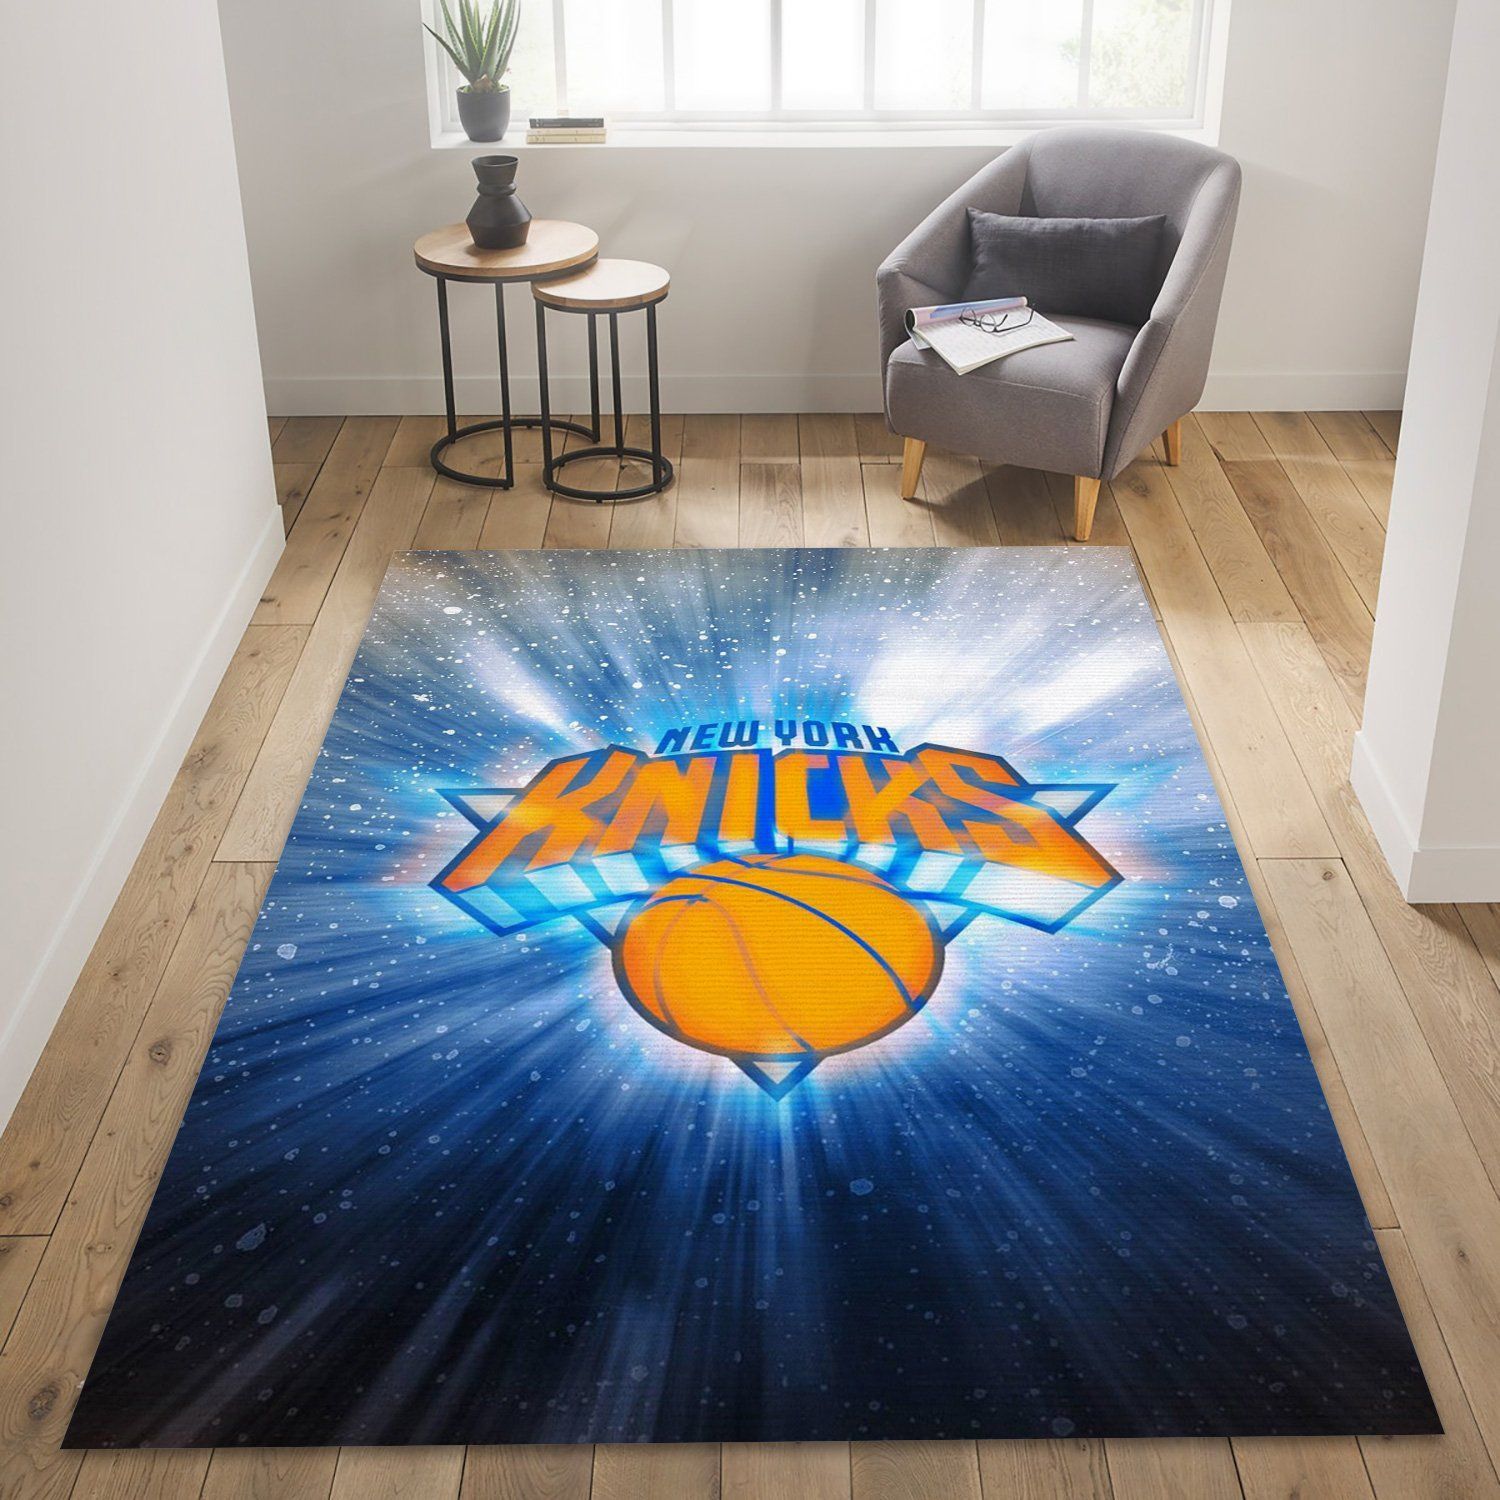 New York Knicks Team Nba Floor home decoration carpet rug